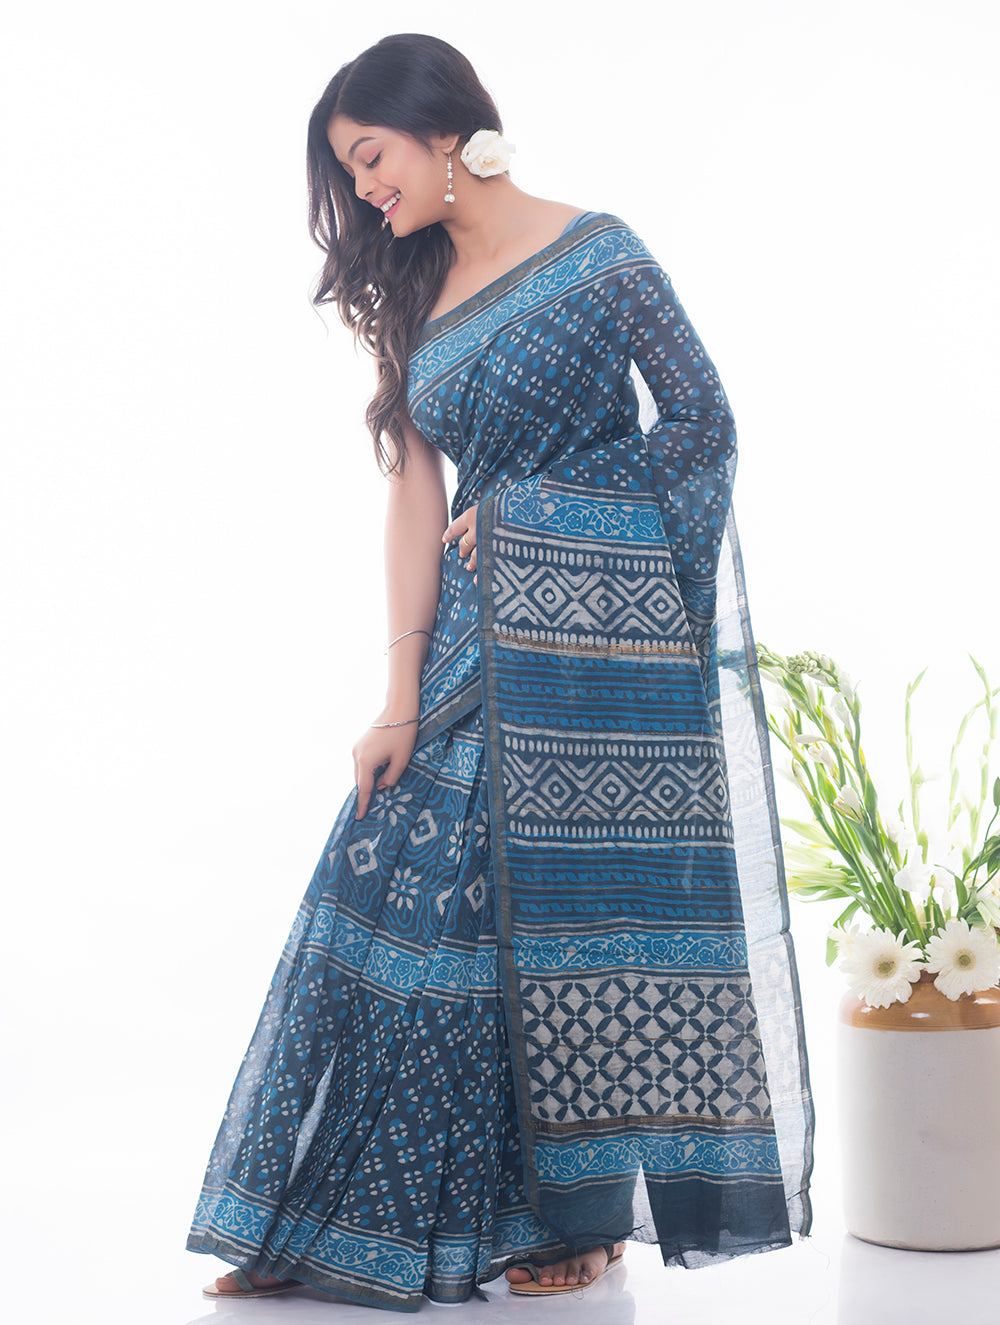 Load image into Gallery viewer, Classic Elegance.Dabu Block Printed Chanderi Saree - Blue Floral